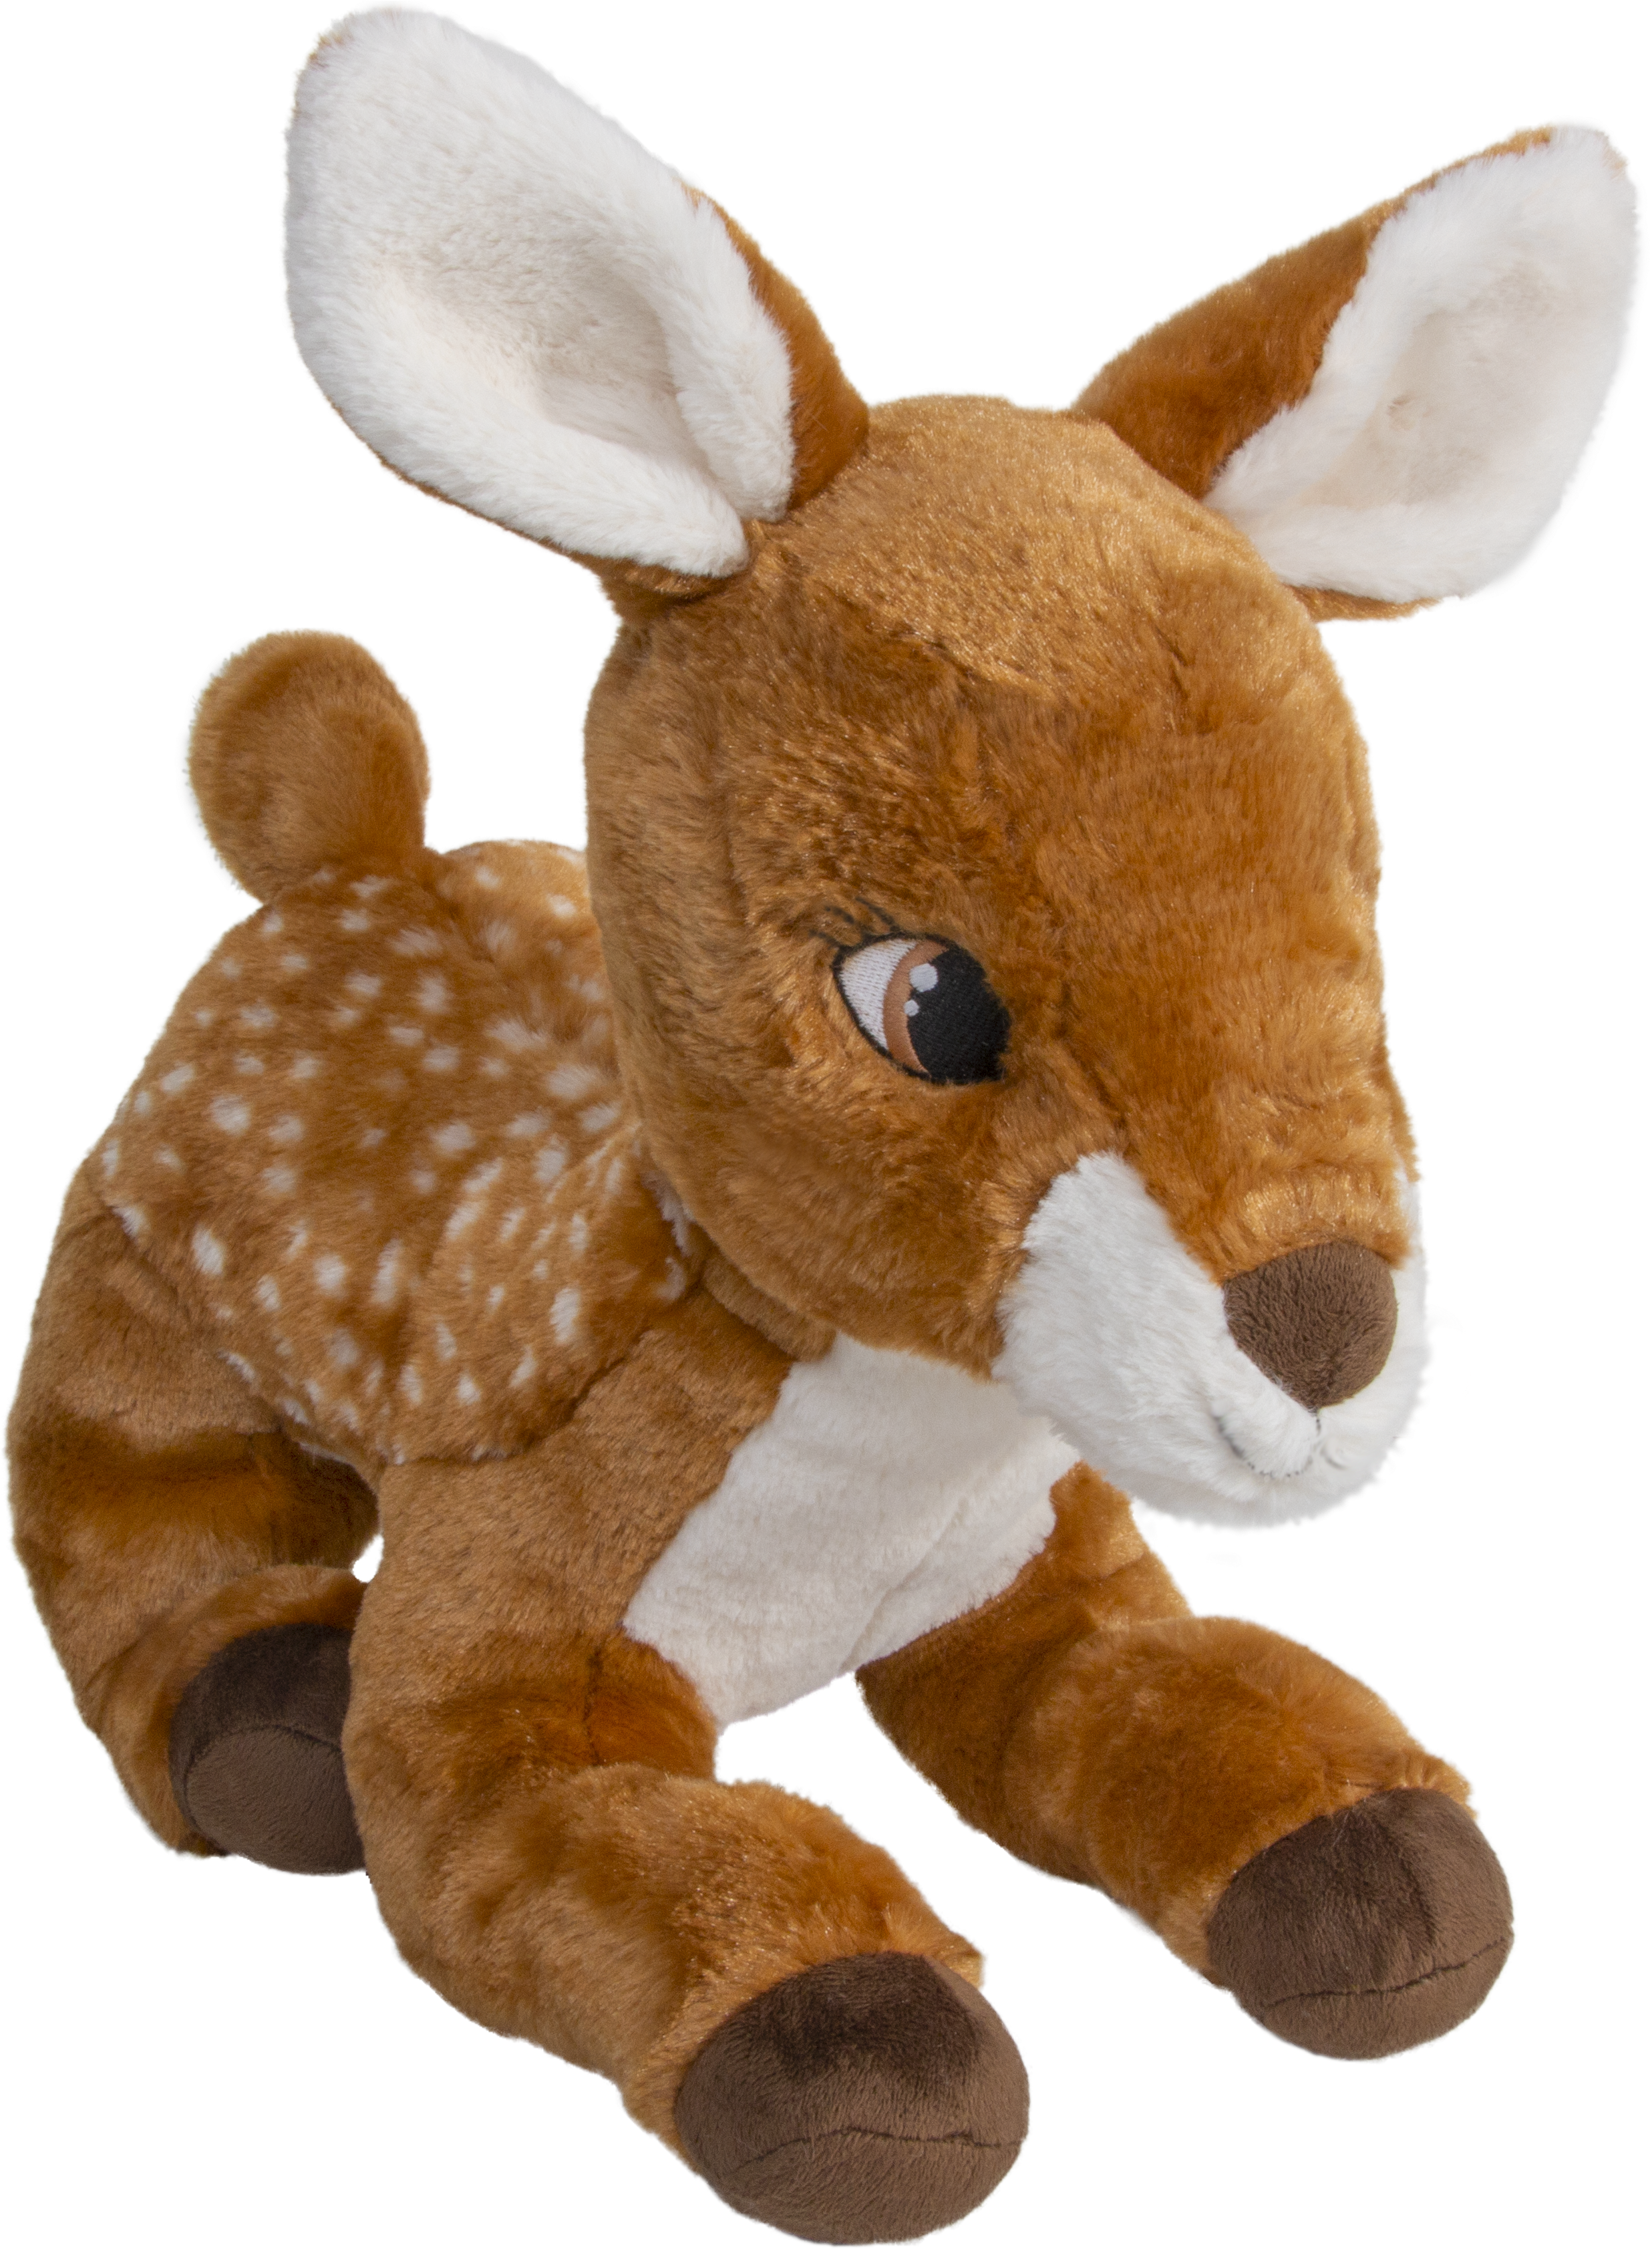 A Stuffed Animal Of A Deer